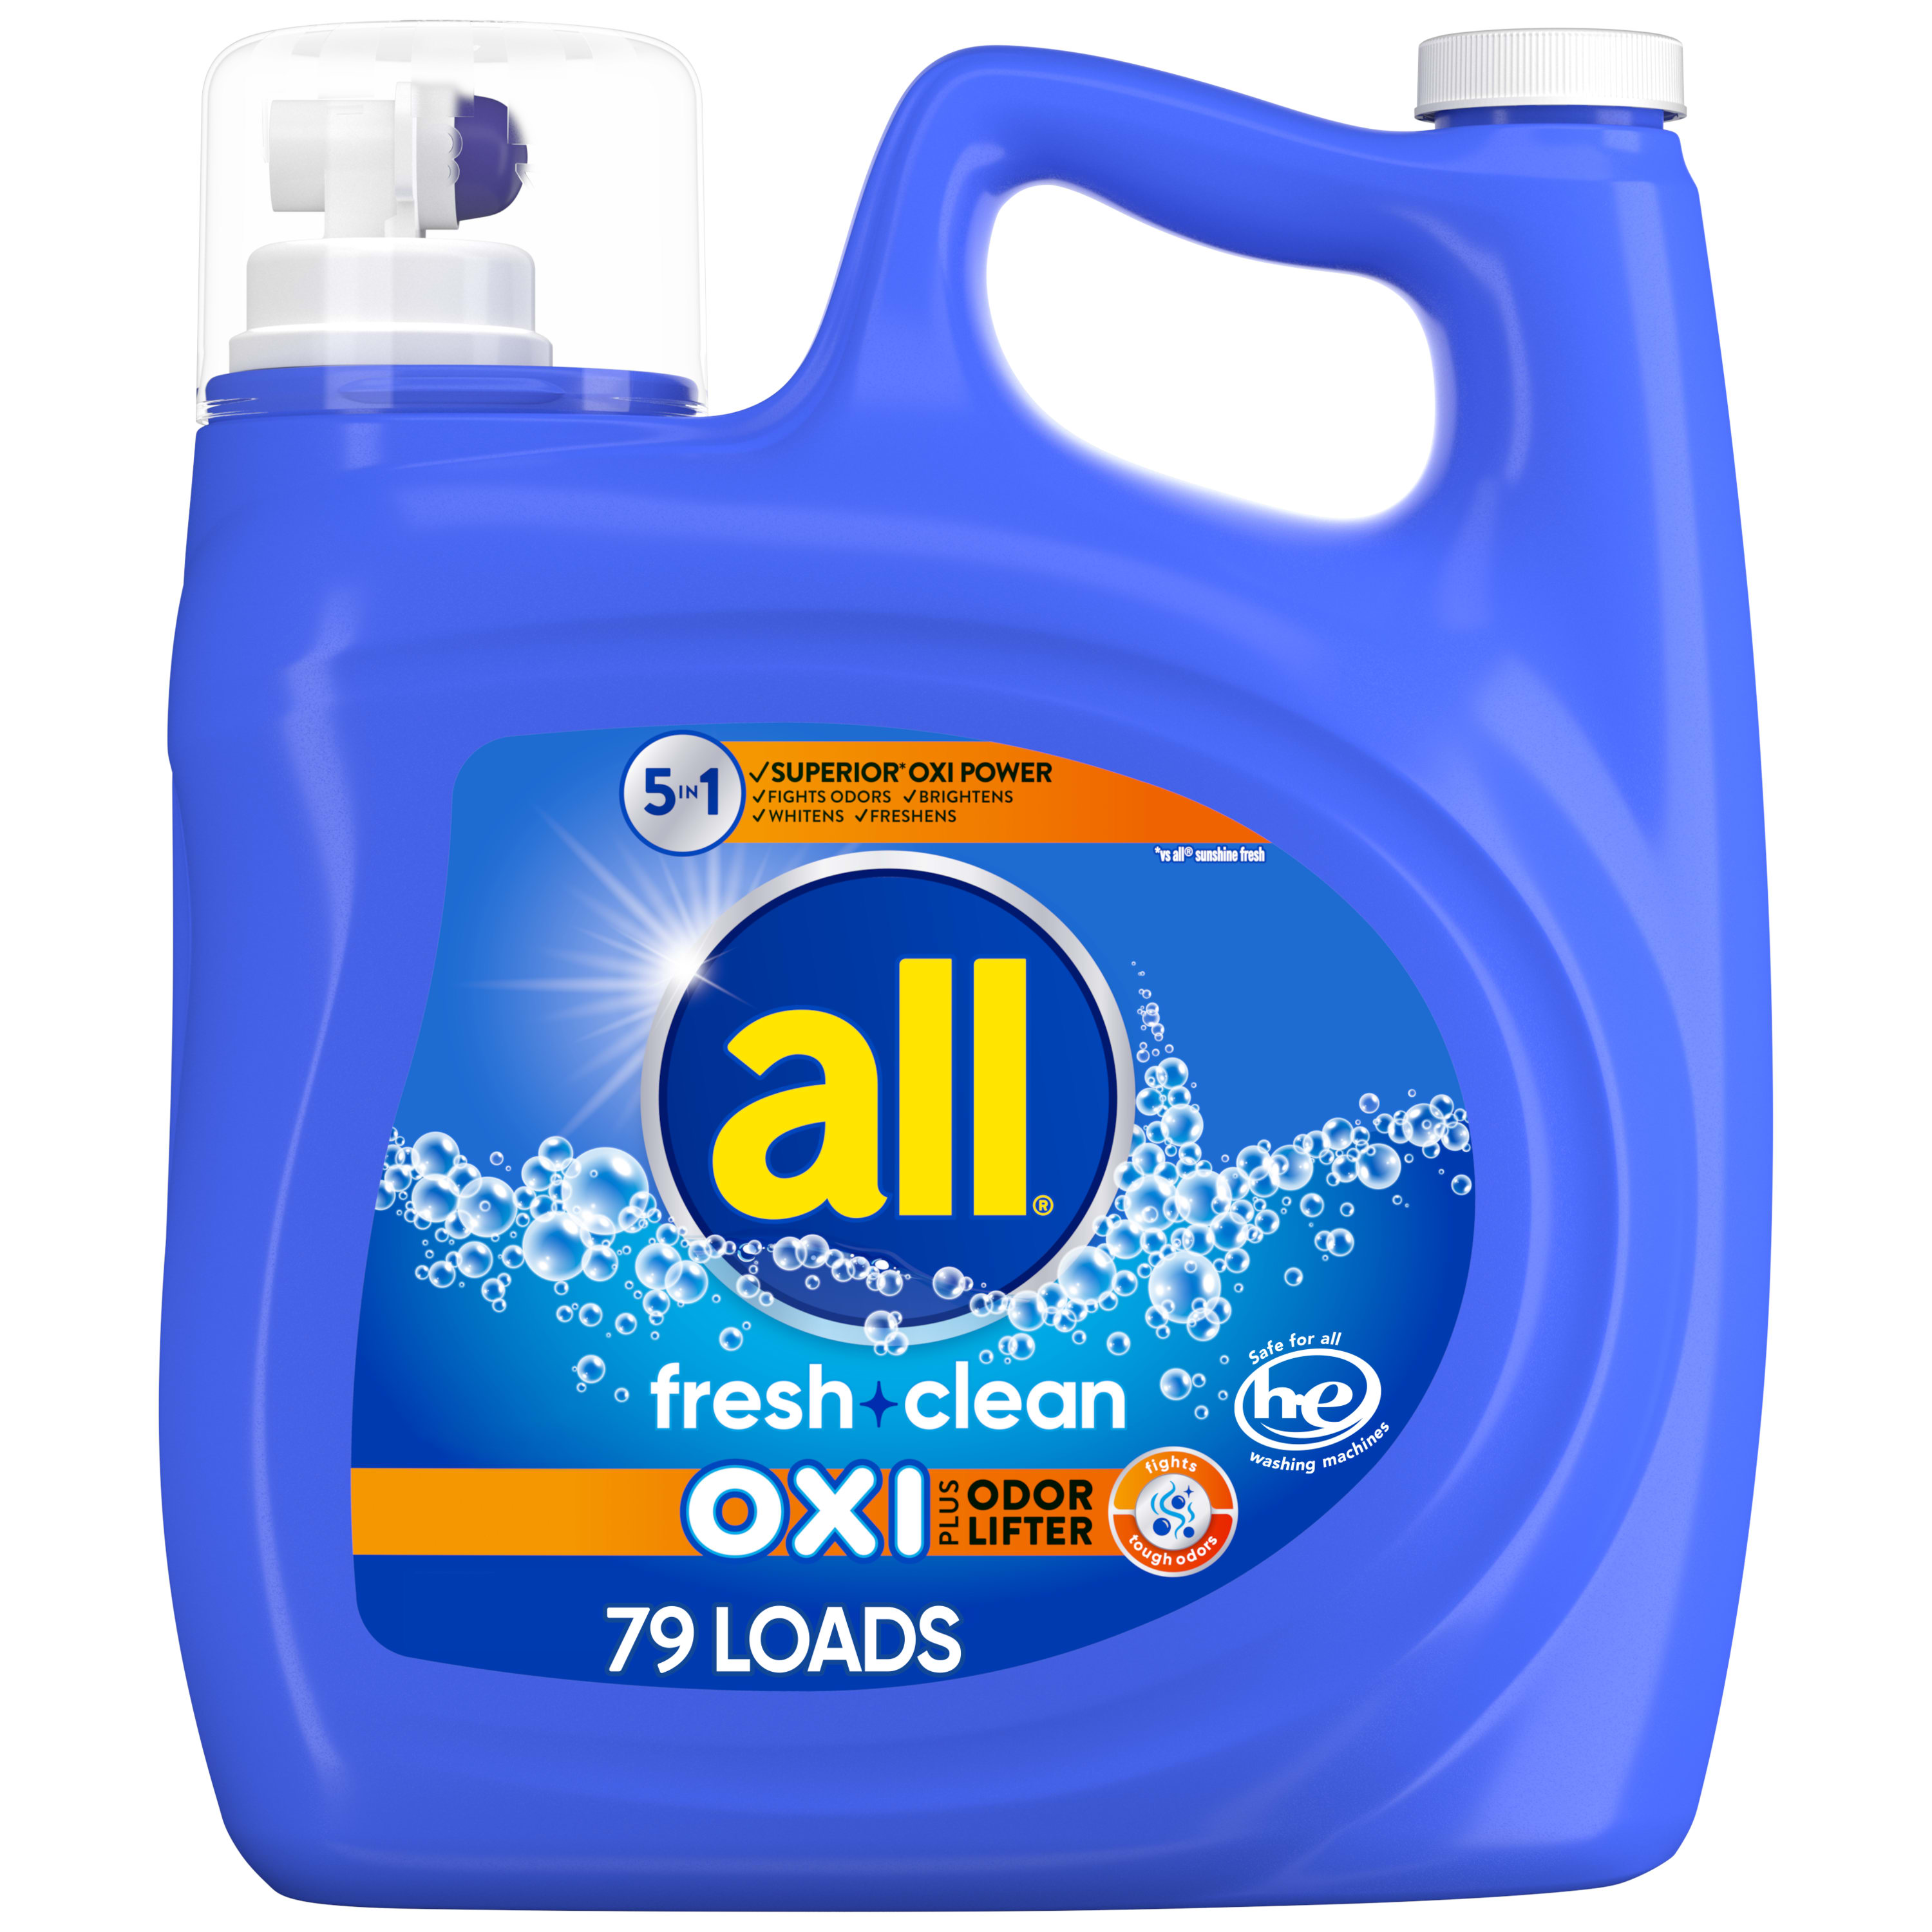 all Liquid Laundry Detergent, Fresh Clean Oxi plus Odor Lifter, 141 fl oz, 79 Loads - image 1 of 5